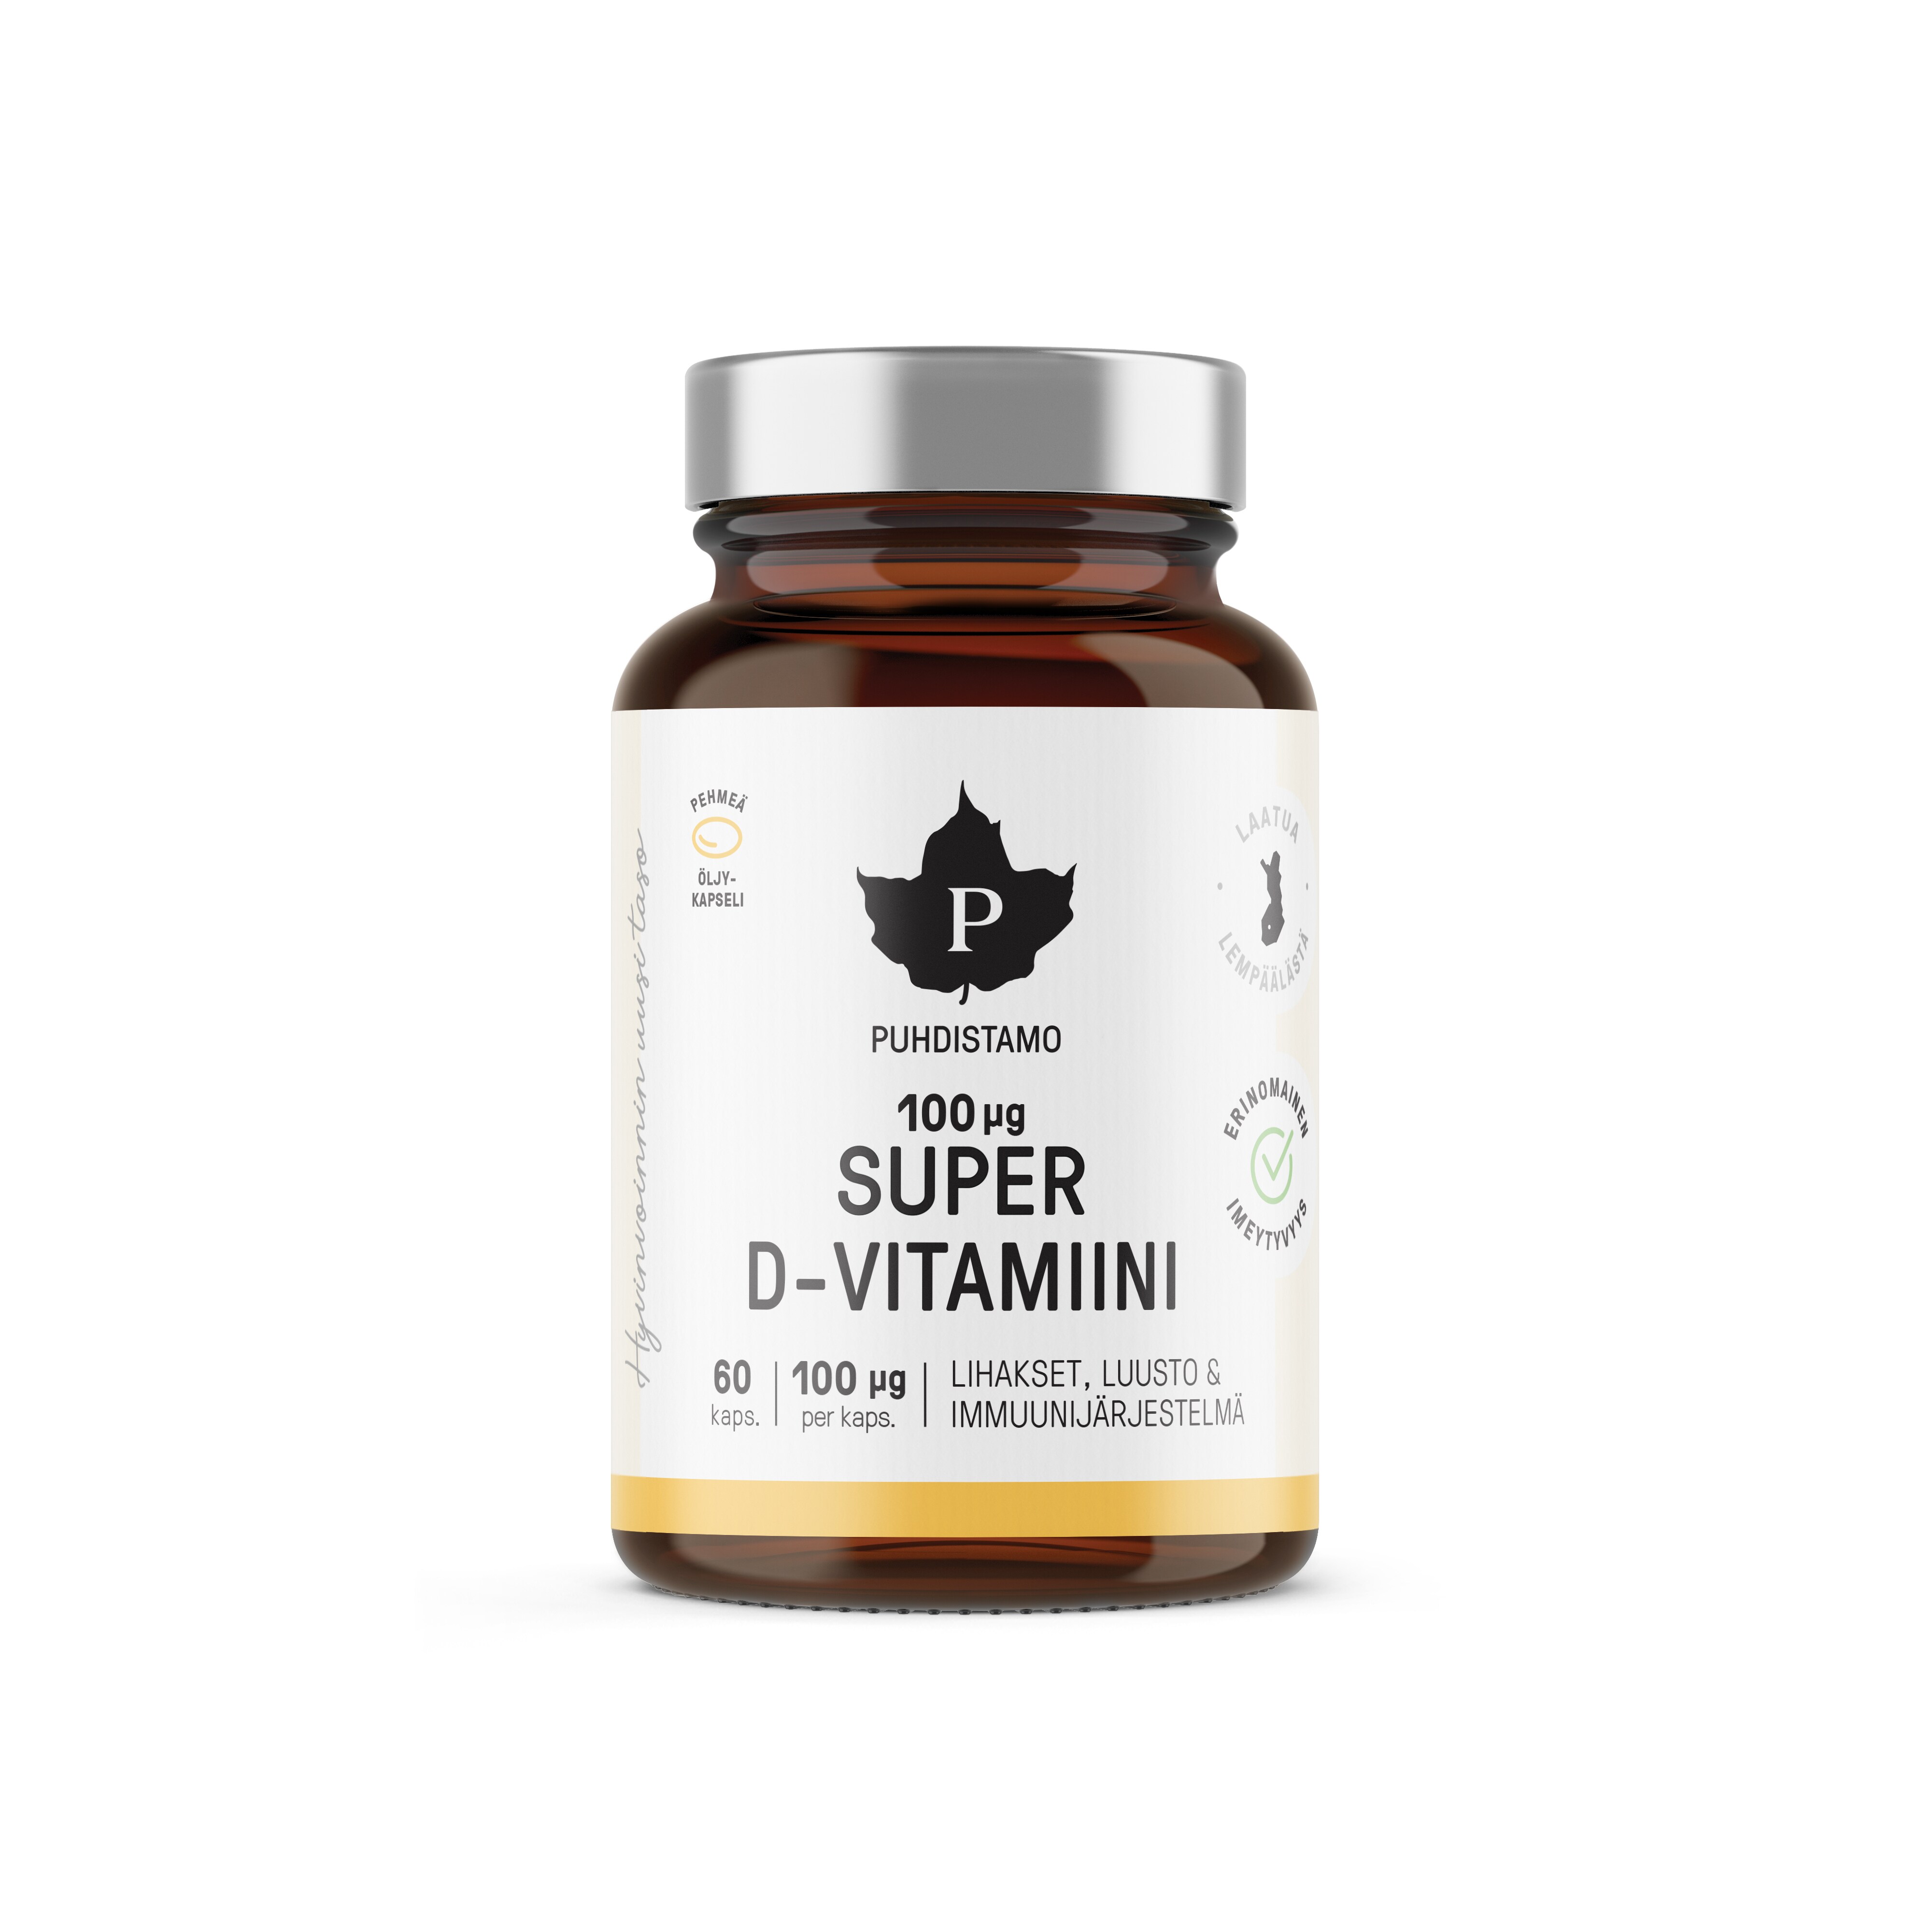 Puhdistamo Super D-vitamiini 100 µg